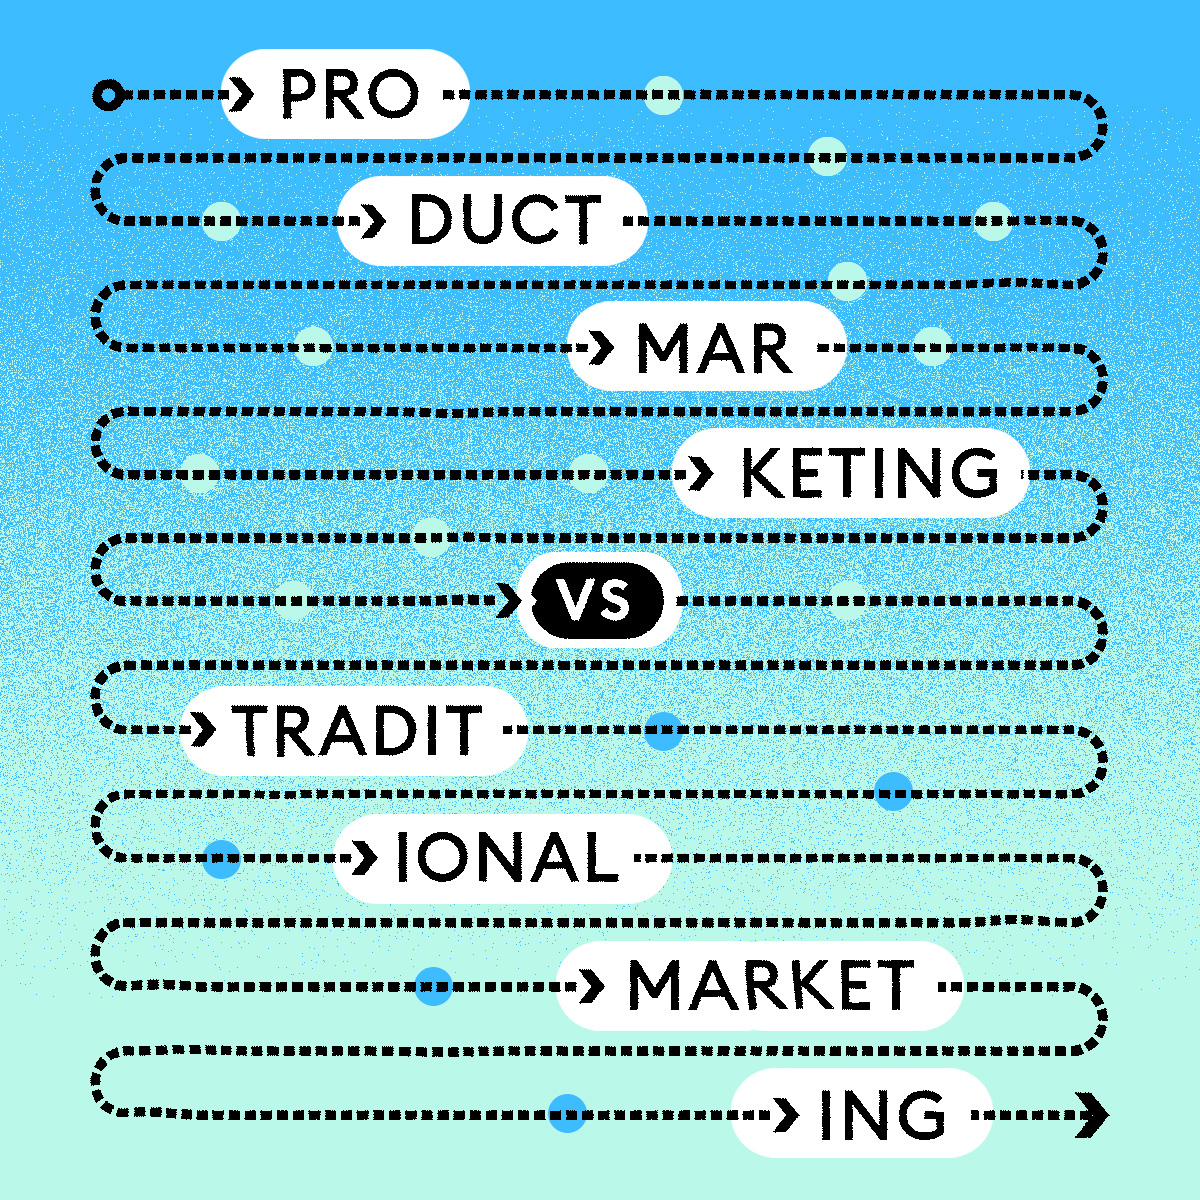 Product marketing vs. traditional marketing